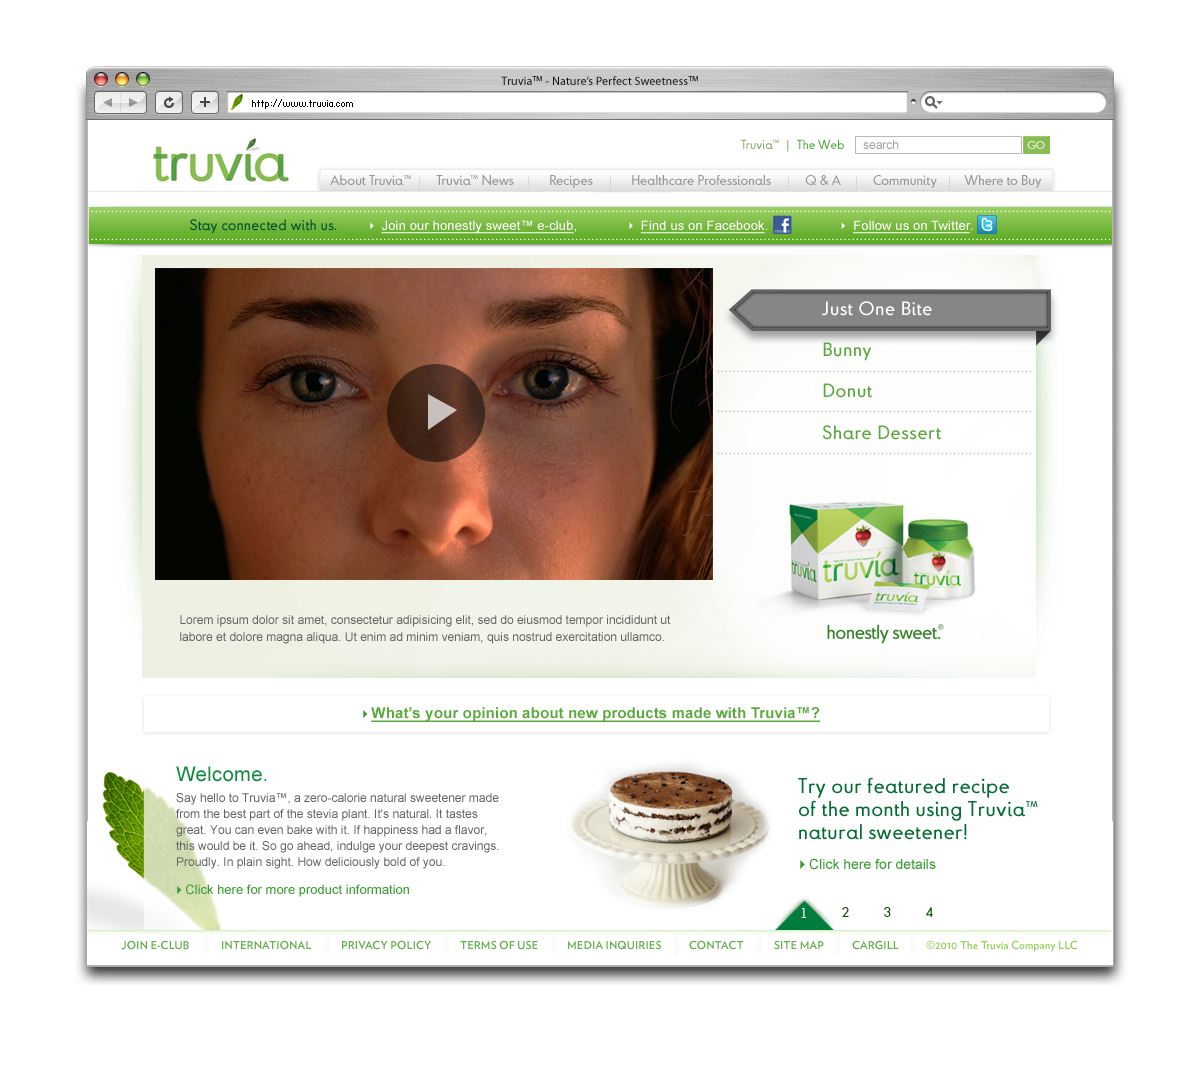 brand truvia sweetener social media recipes forum Flash cms video